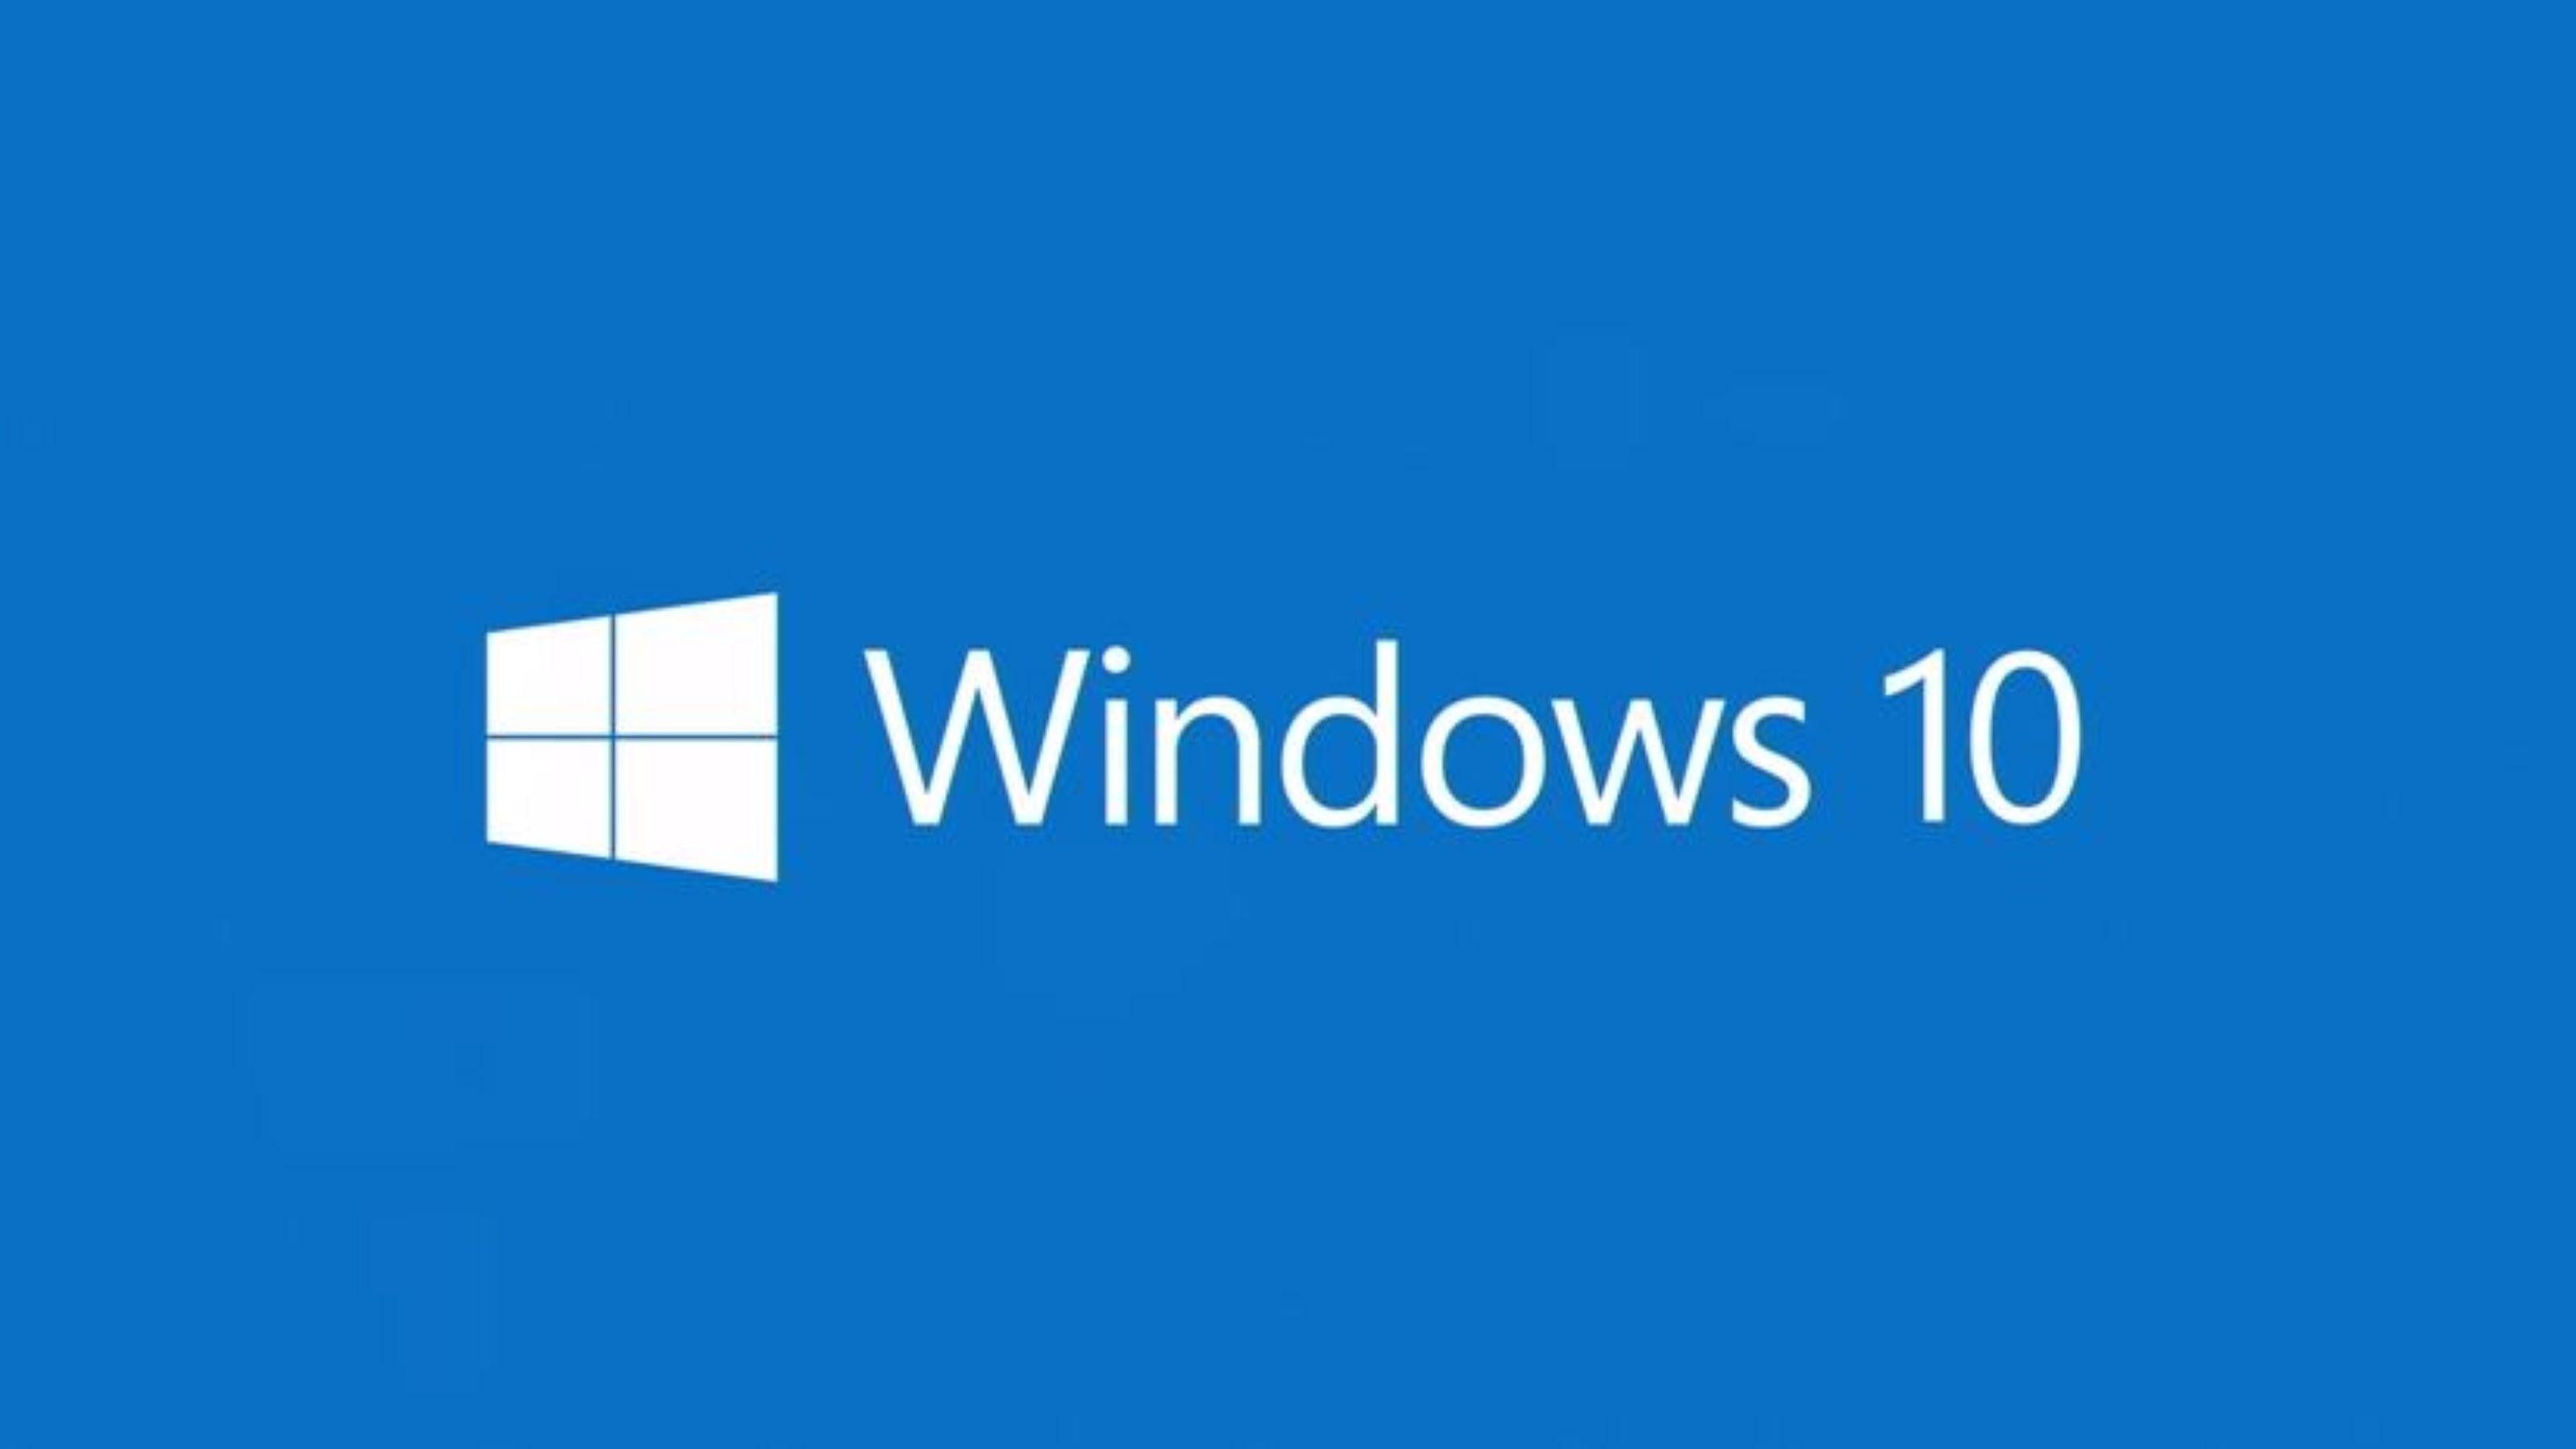 Download file ISO Windows 10 chính chủ từ Microsoft